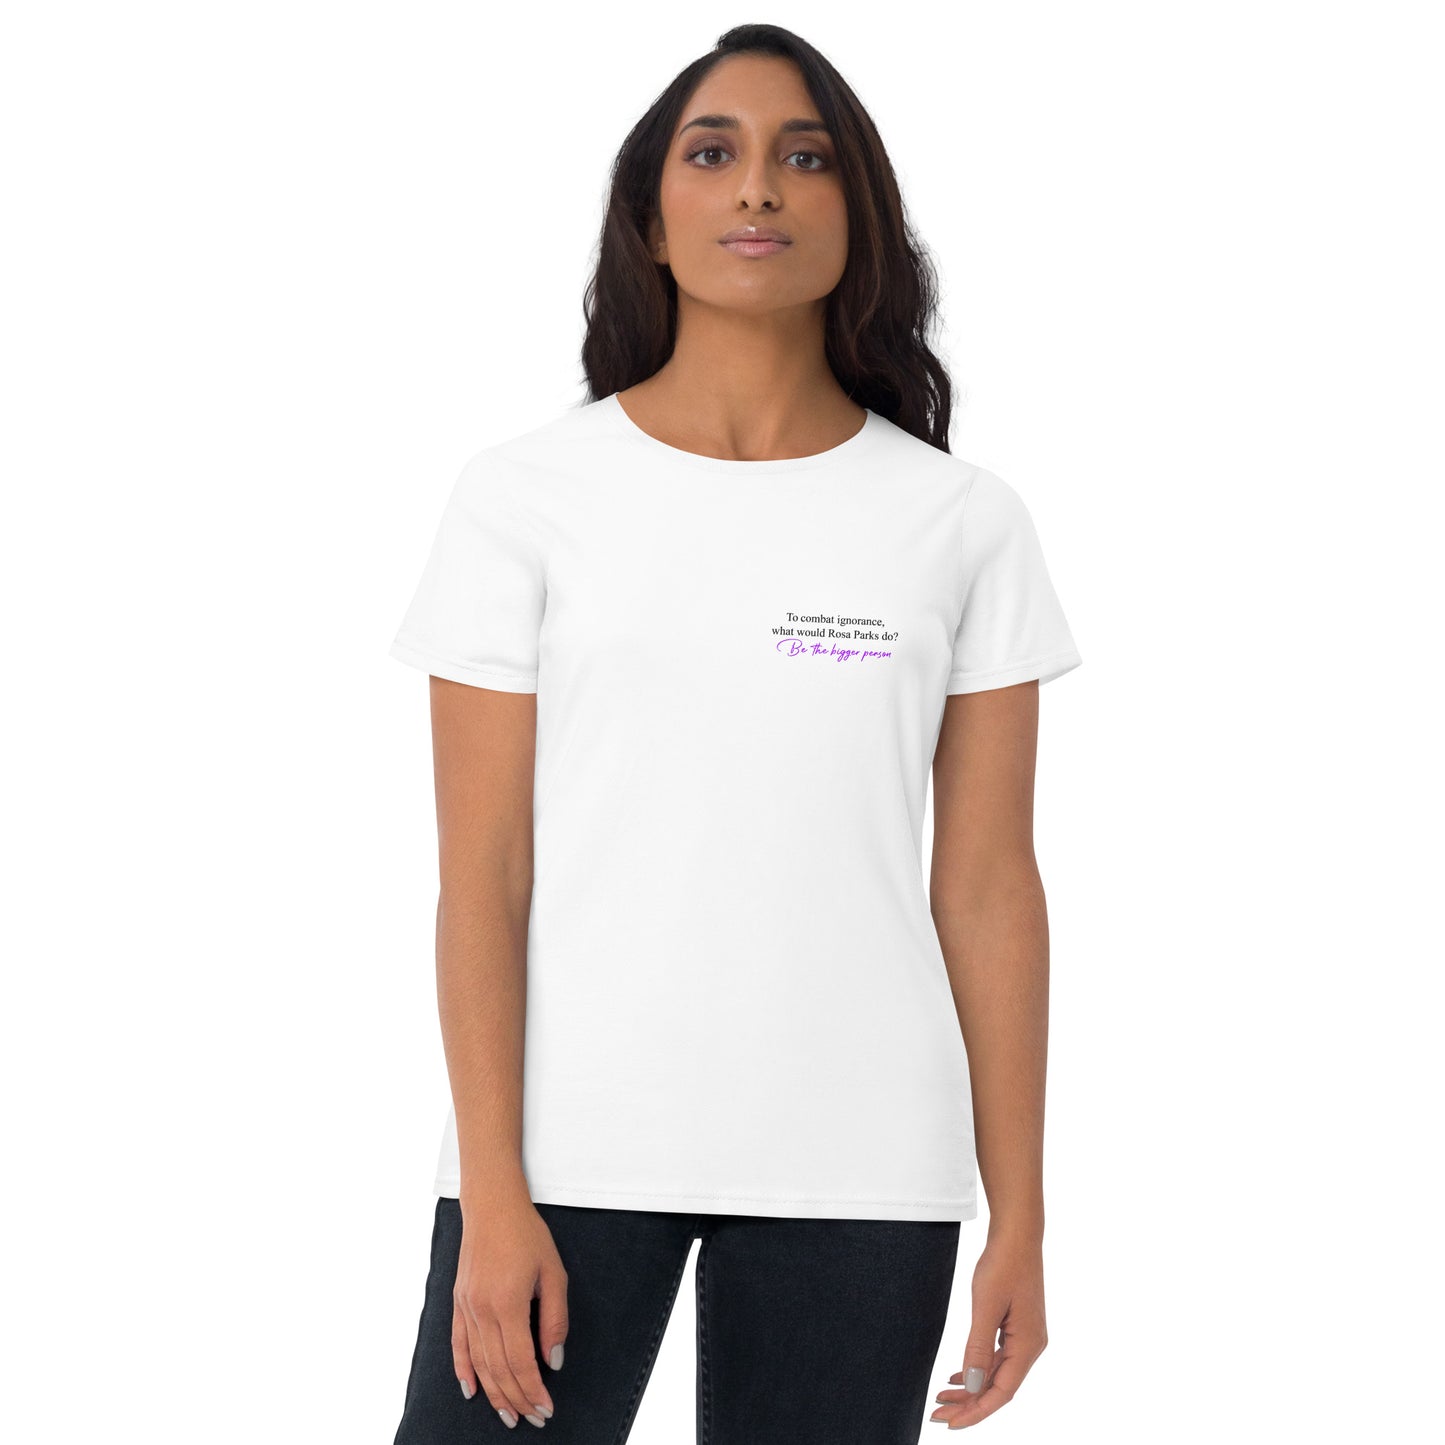 BTBP COURAGE - Women's White T-shirt